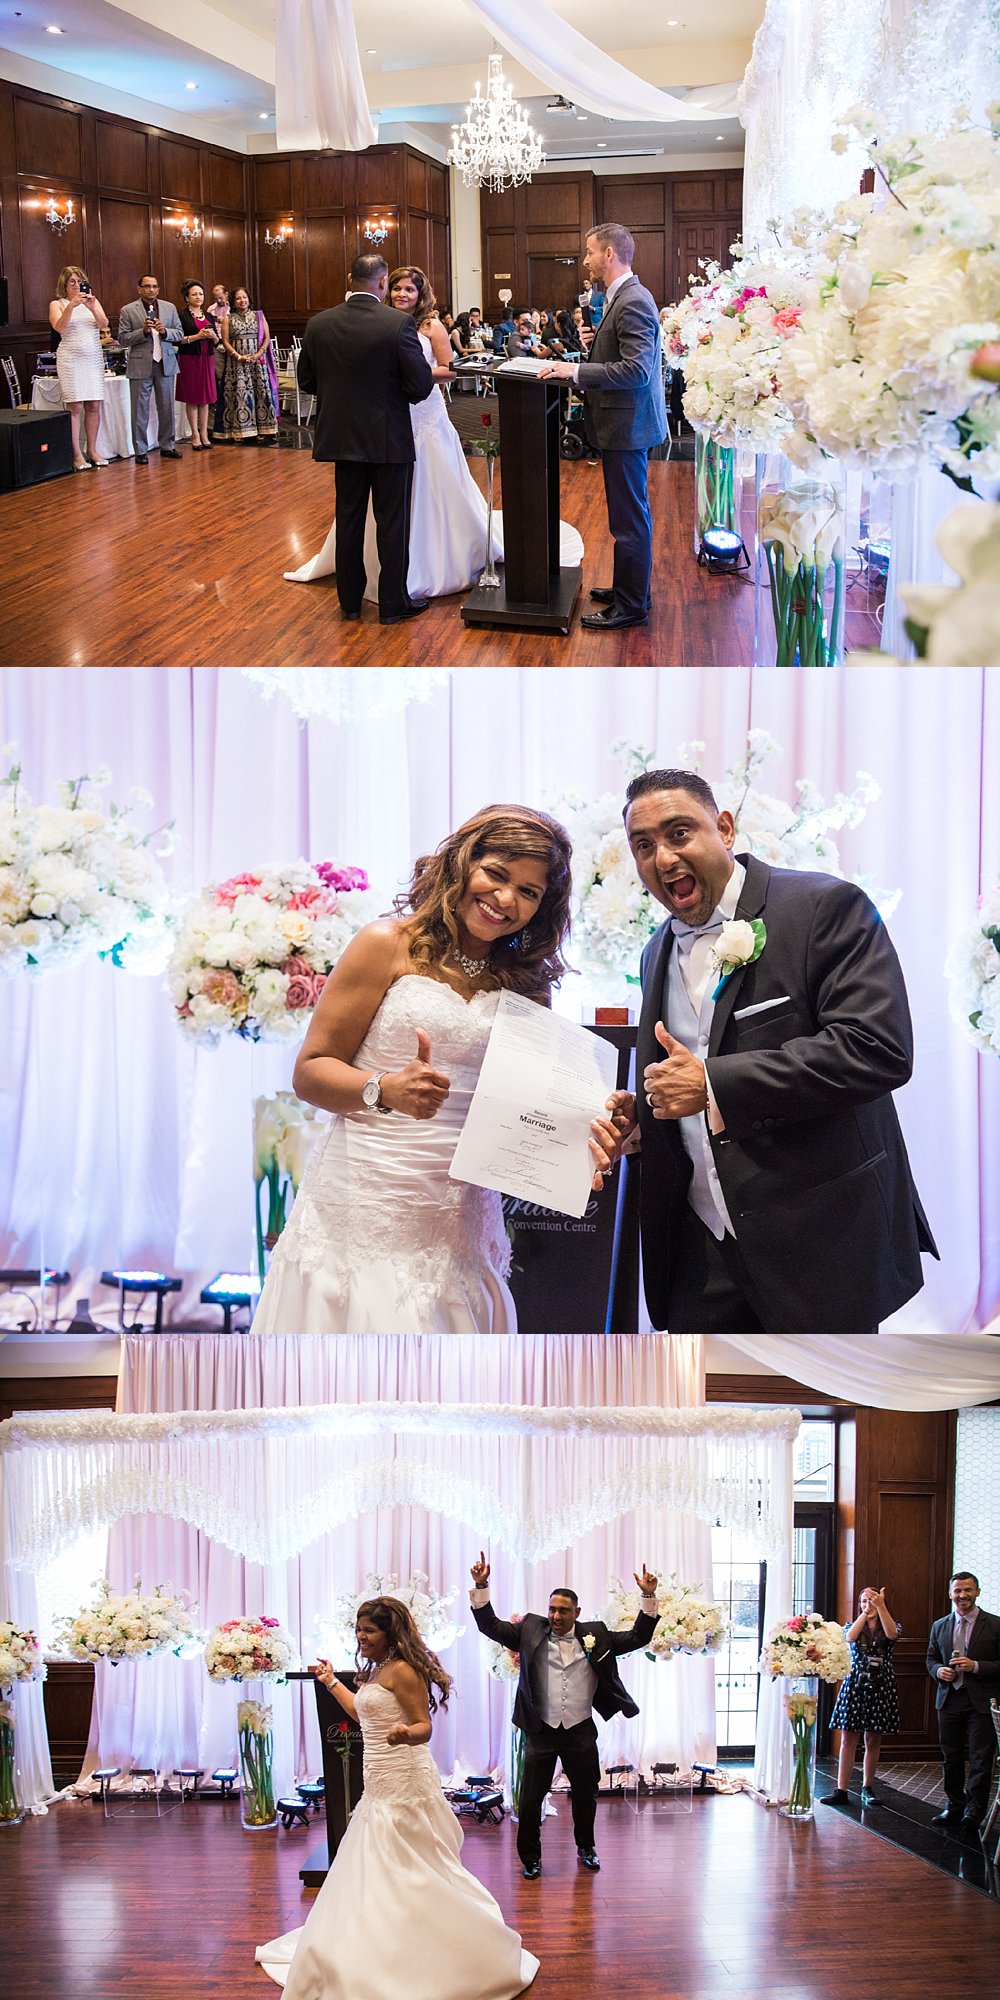 Jennifer Blaak Photography, Hamilton Wedding Photographer, Toronto Wedding Photographer, Just Married, Marriage Certificate, Paradise Banquet Hall